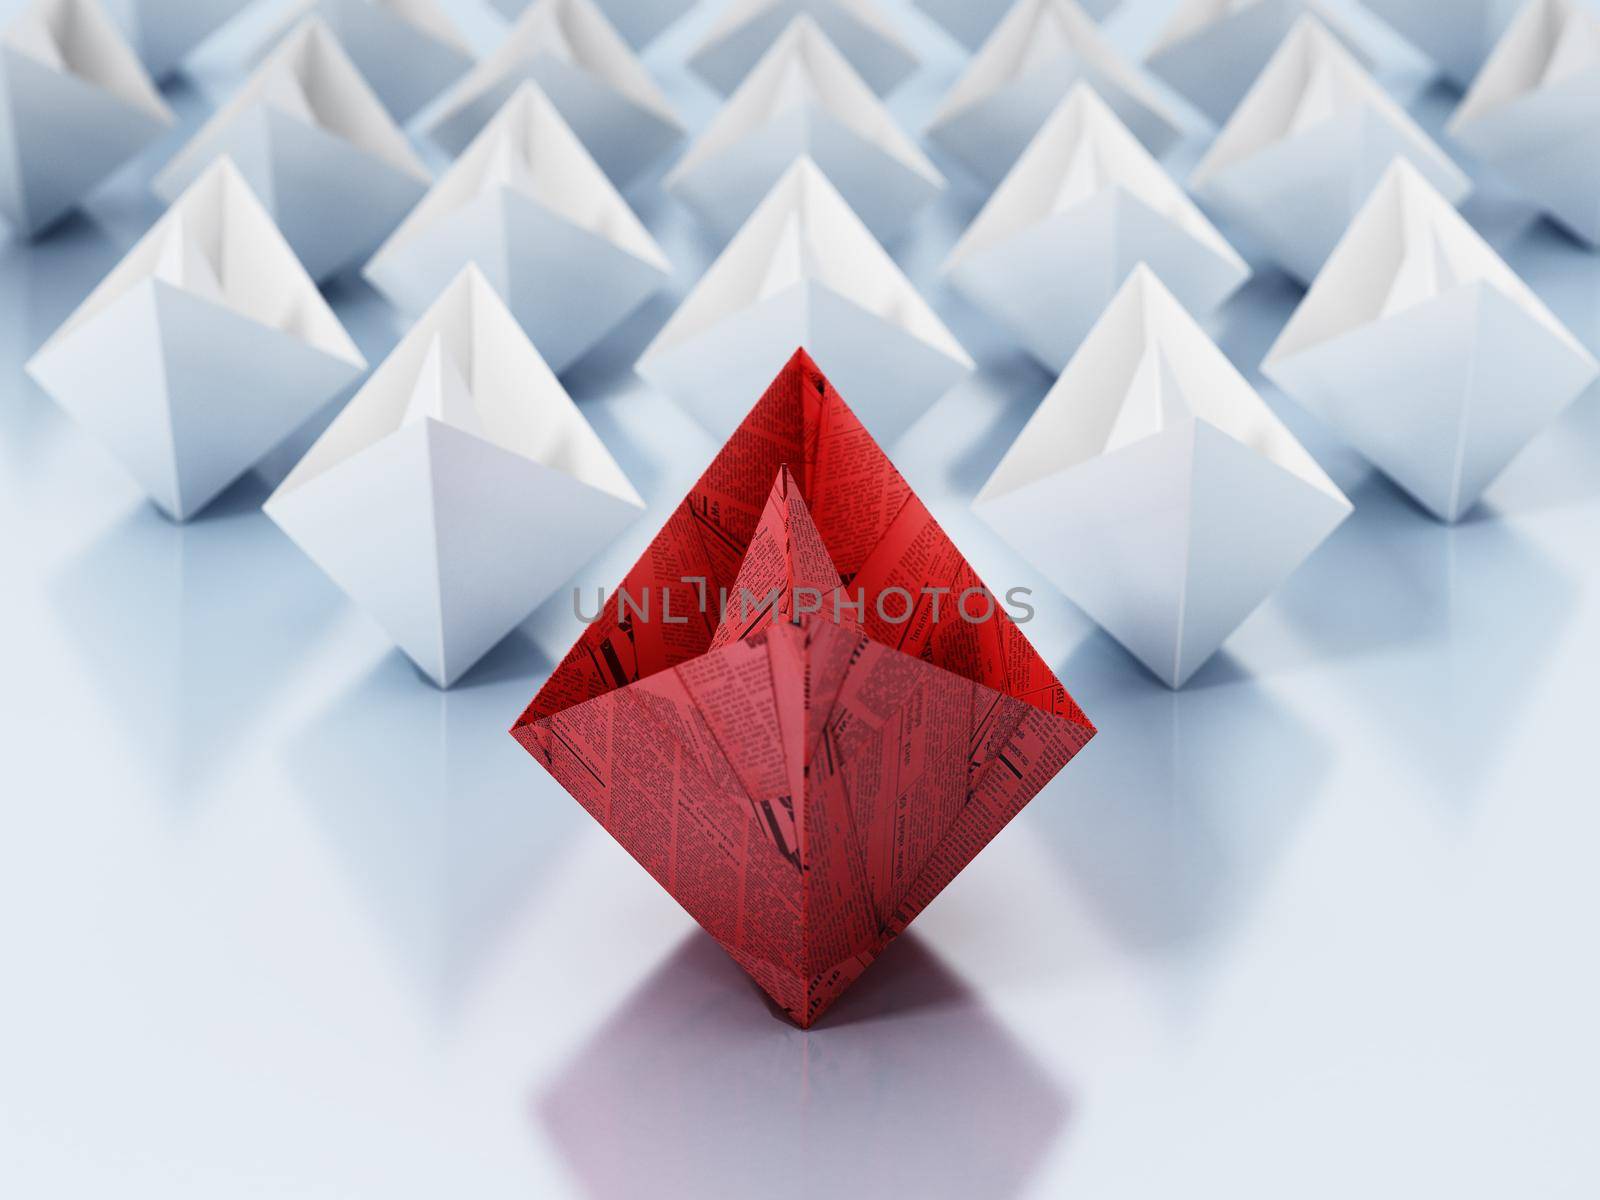 Red paper ship leading white regular paper ships. 3D illustration by Simsek